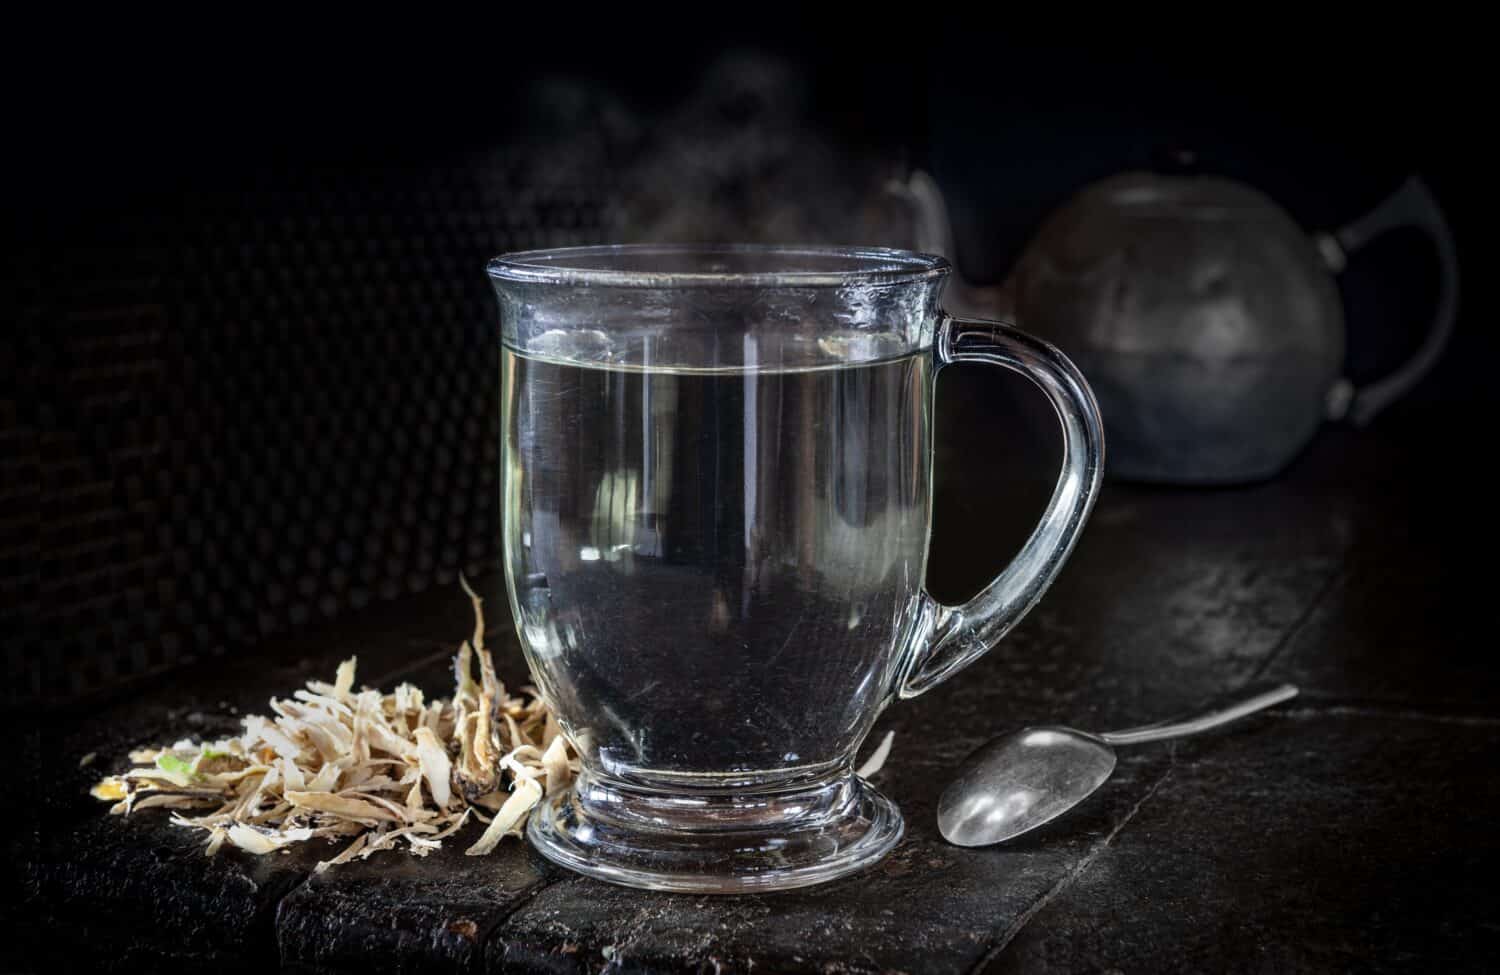 Ocotillo bark tea in a glass cup with ocotillo bark on side, Fouquieria Splendens